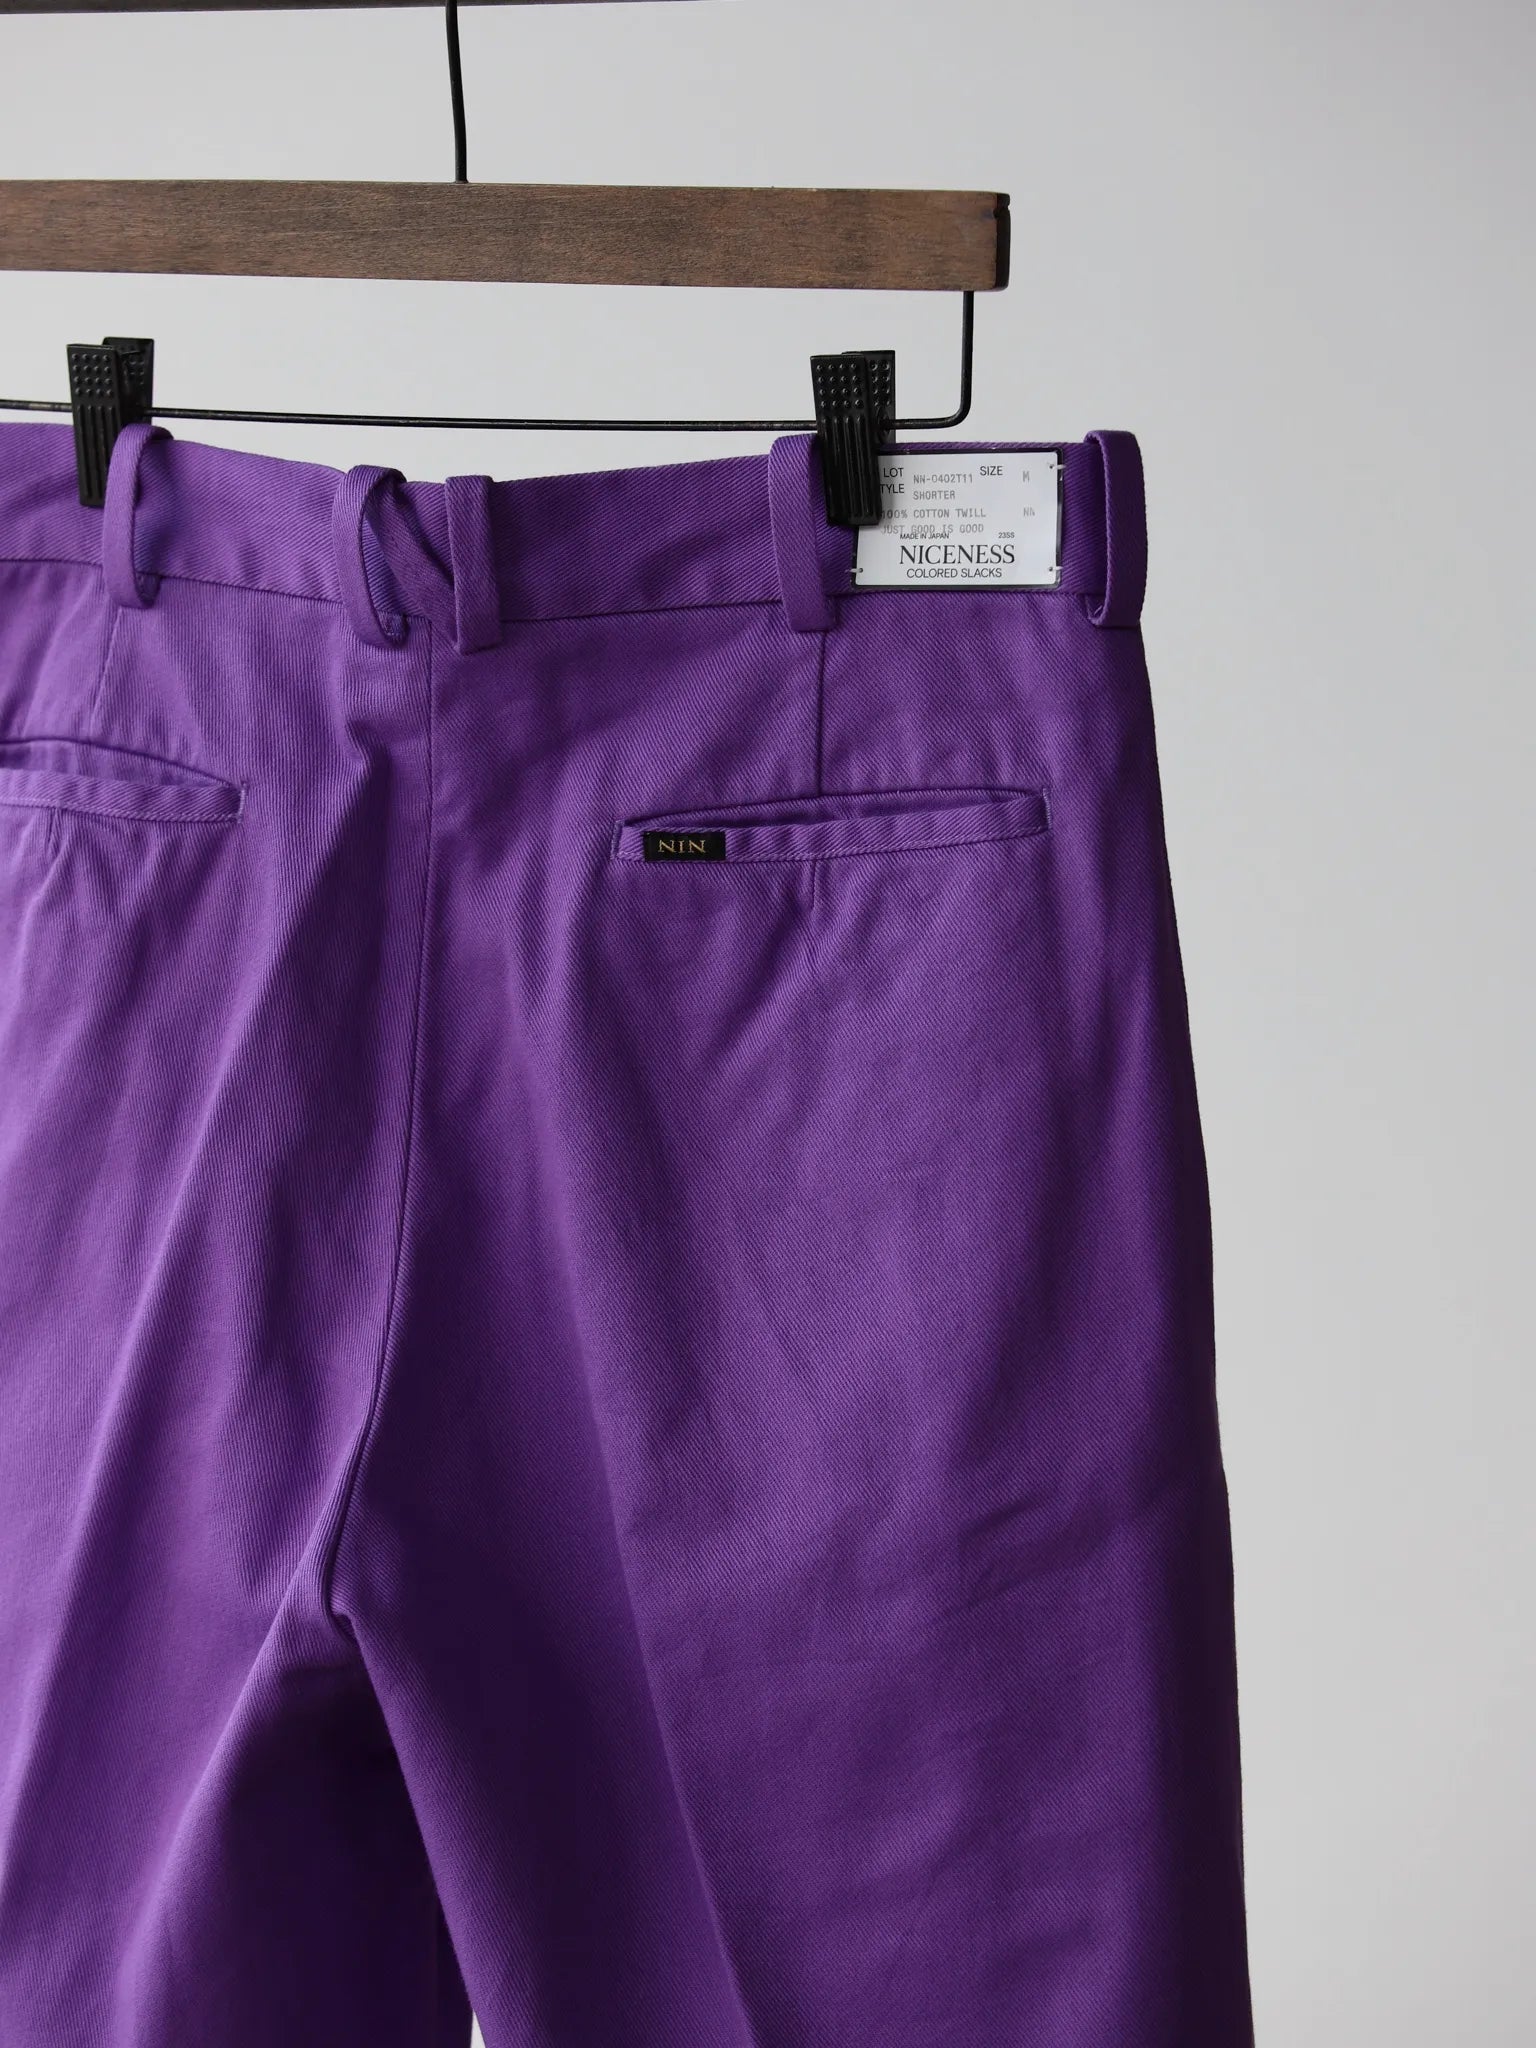 niceness-shorter-colored-slacks-purple-7